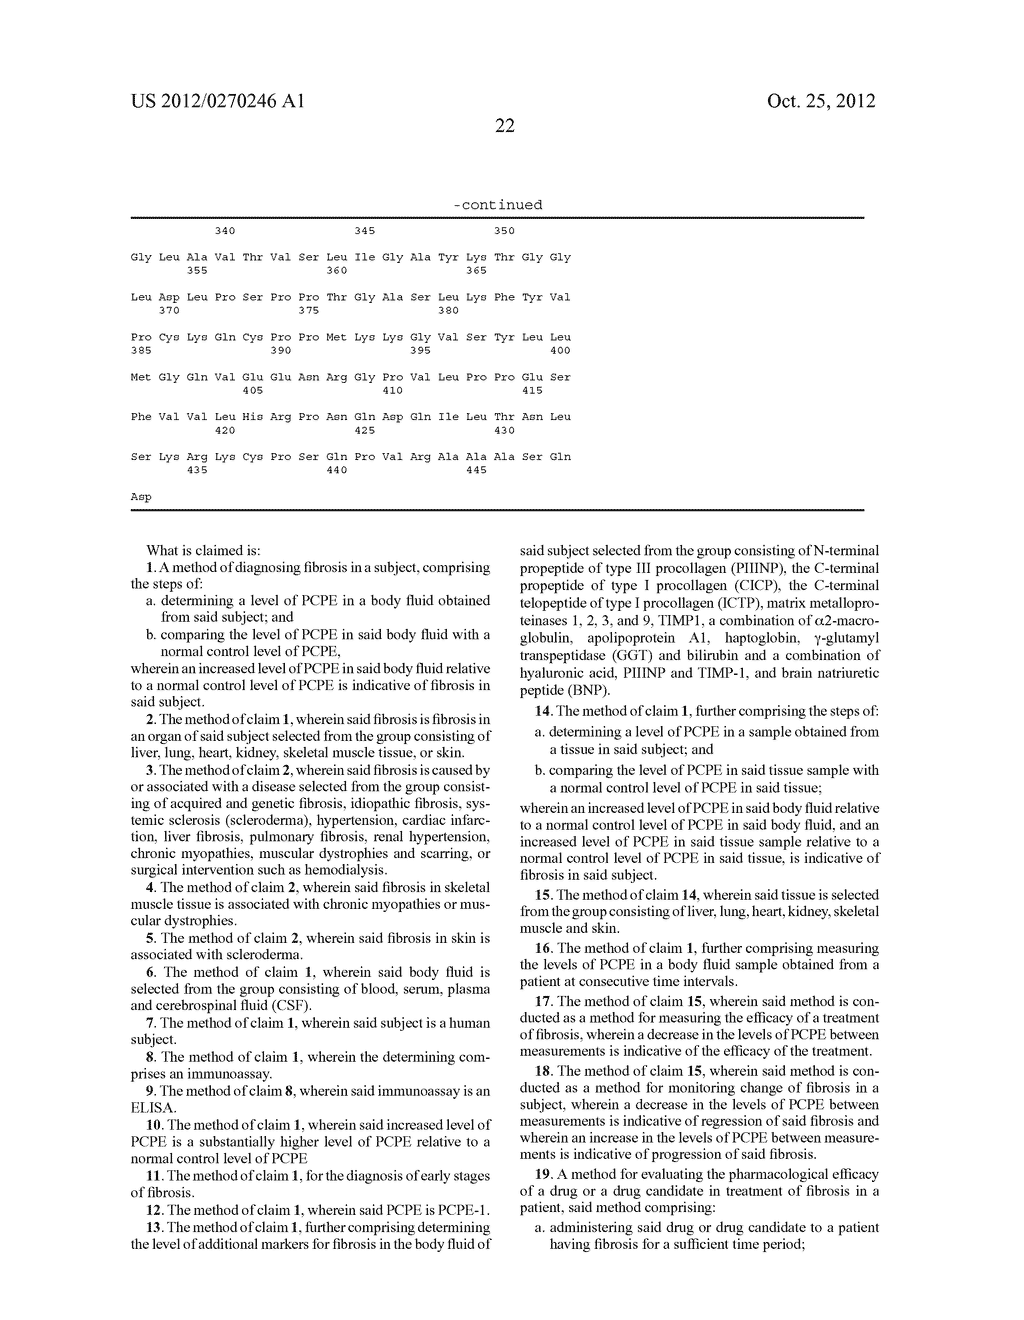 PROCOLLAGEN C-PROTEINASE ENHANCER (PCPE) BIOMARKER FOR BONE FORMATION - diagram, schematic, and image 44